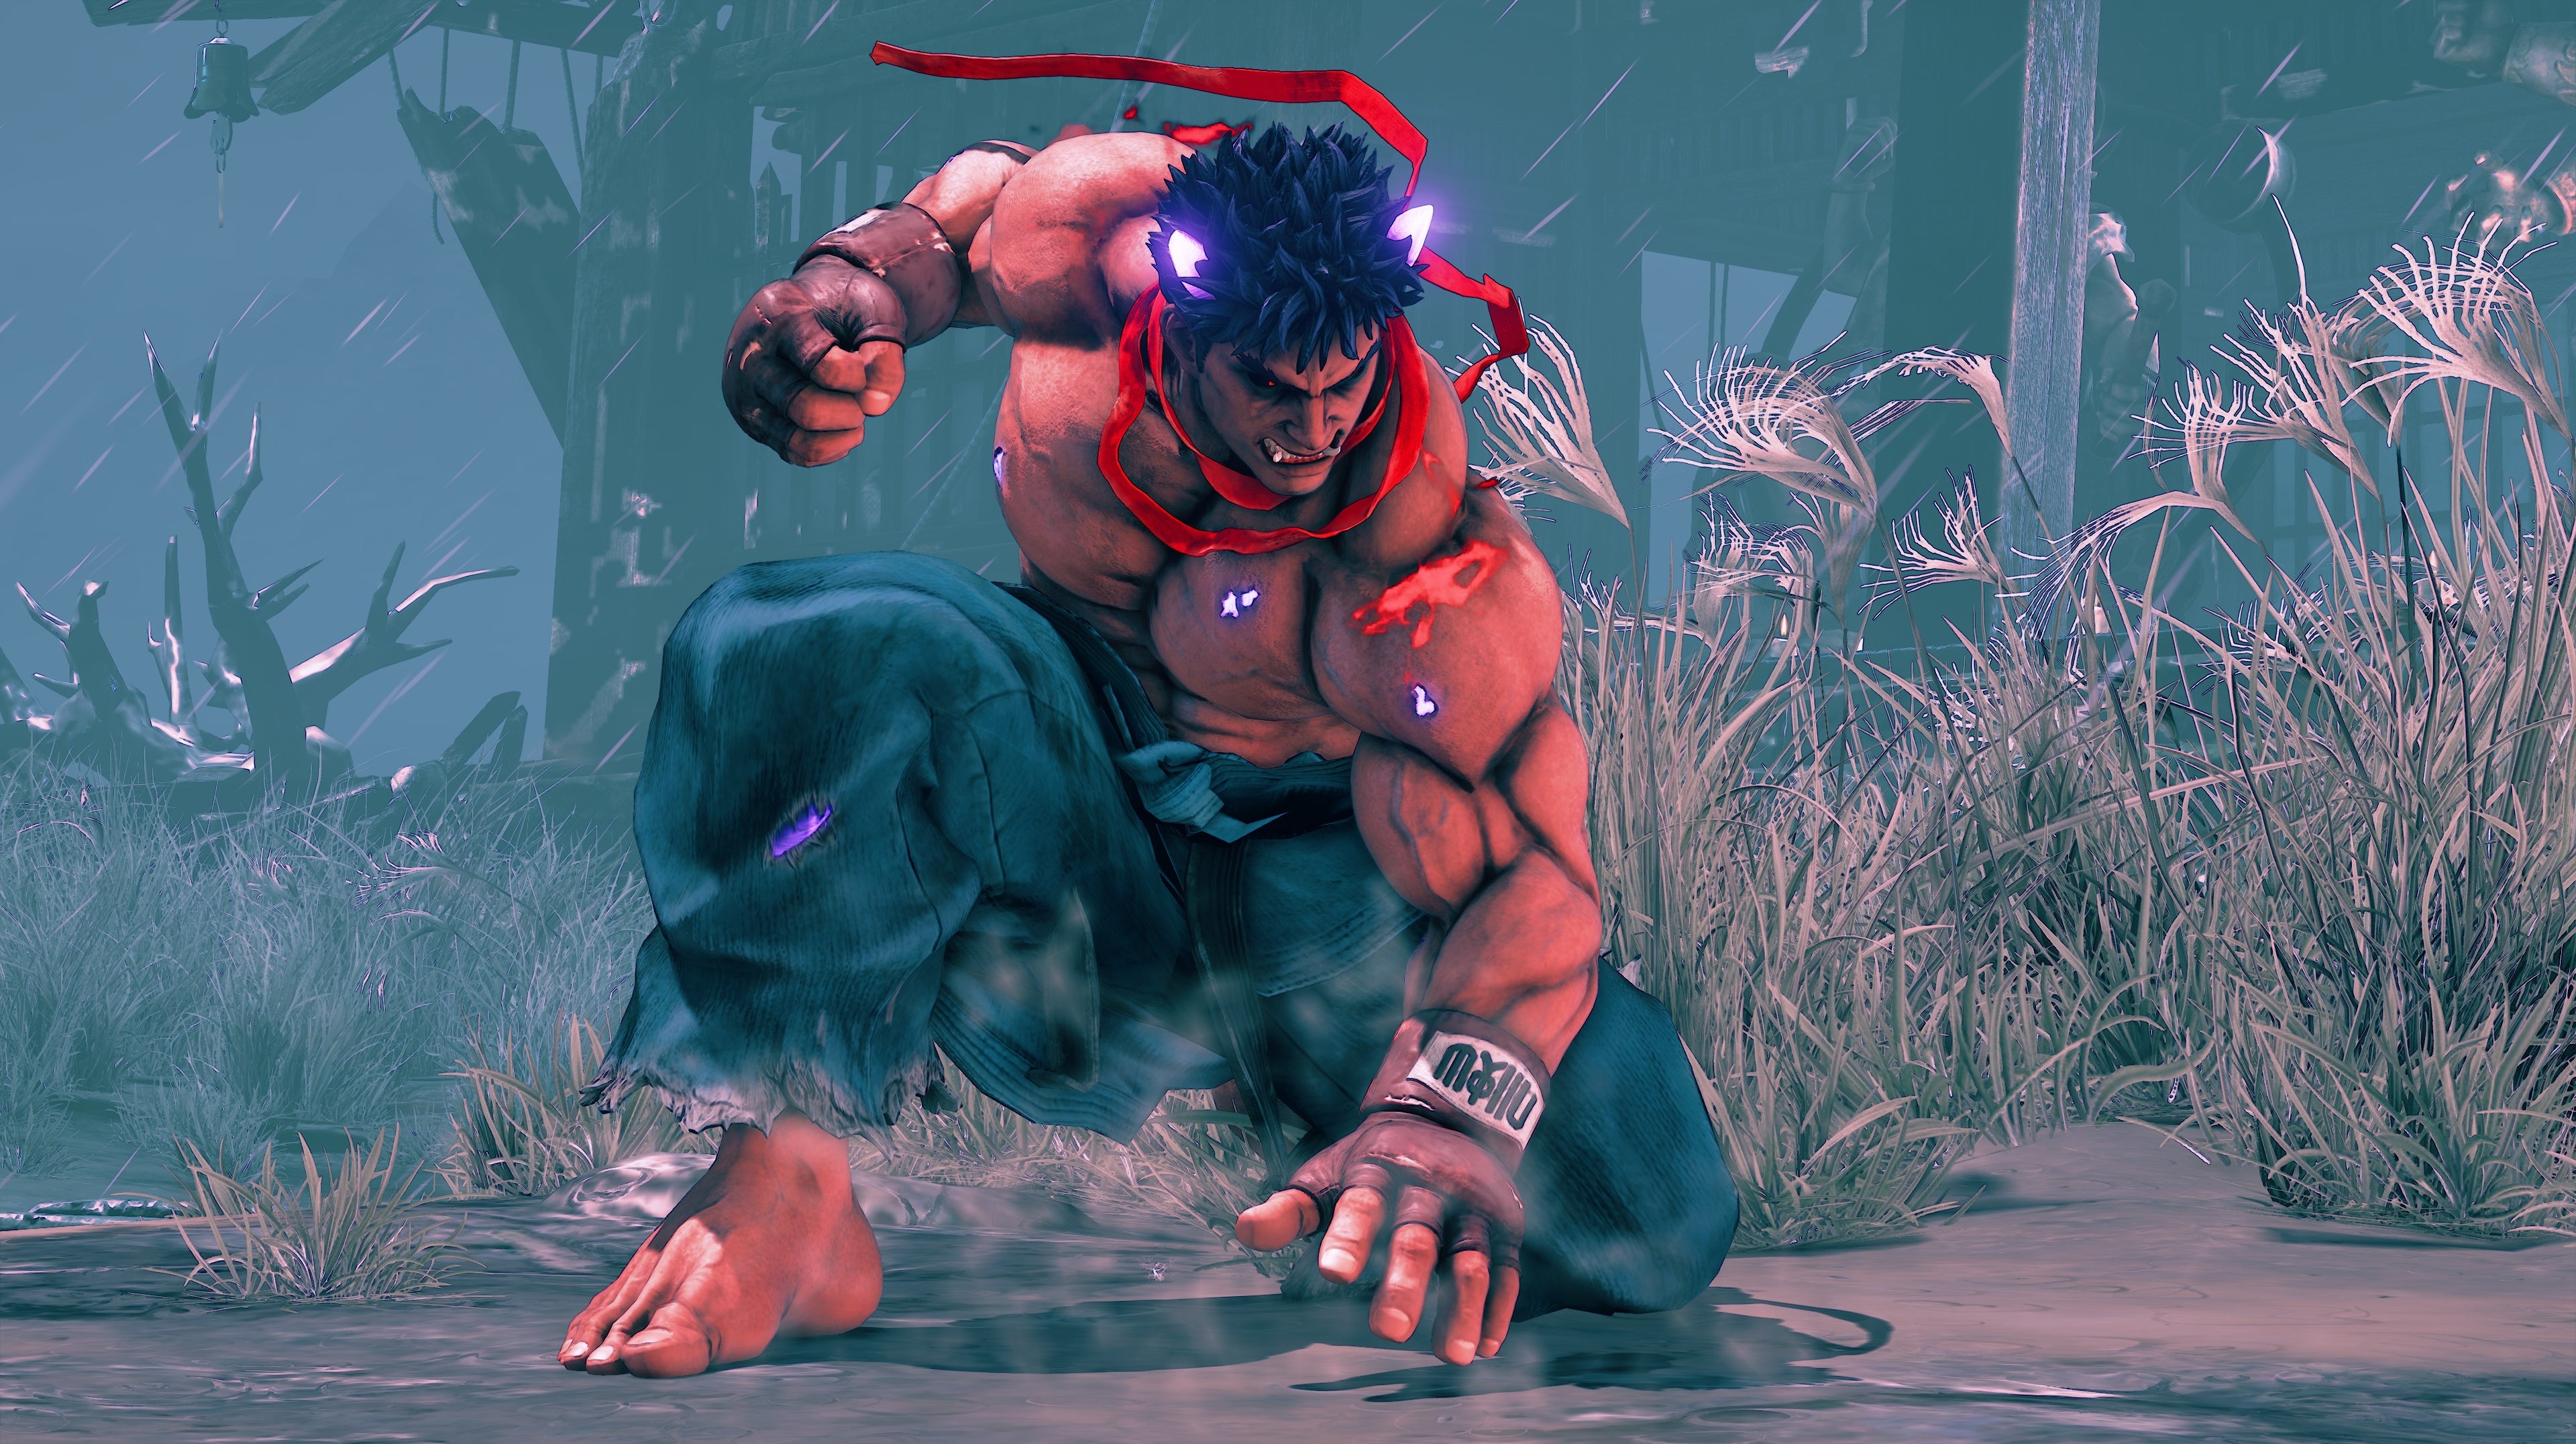 gritar referir barajar Kage inaugura la Temporada 4 de Street Fighter V | Eurogamer.es